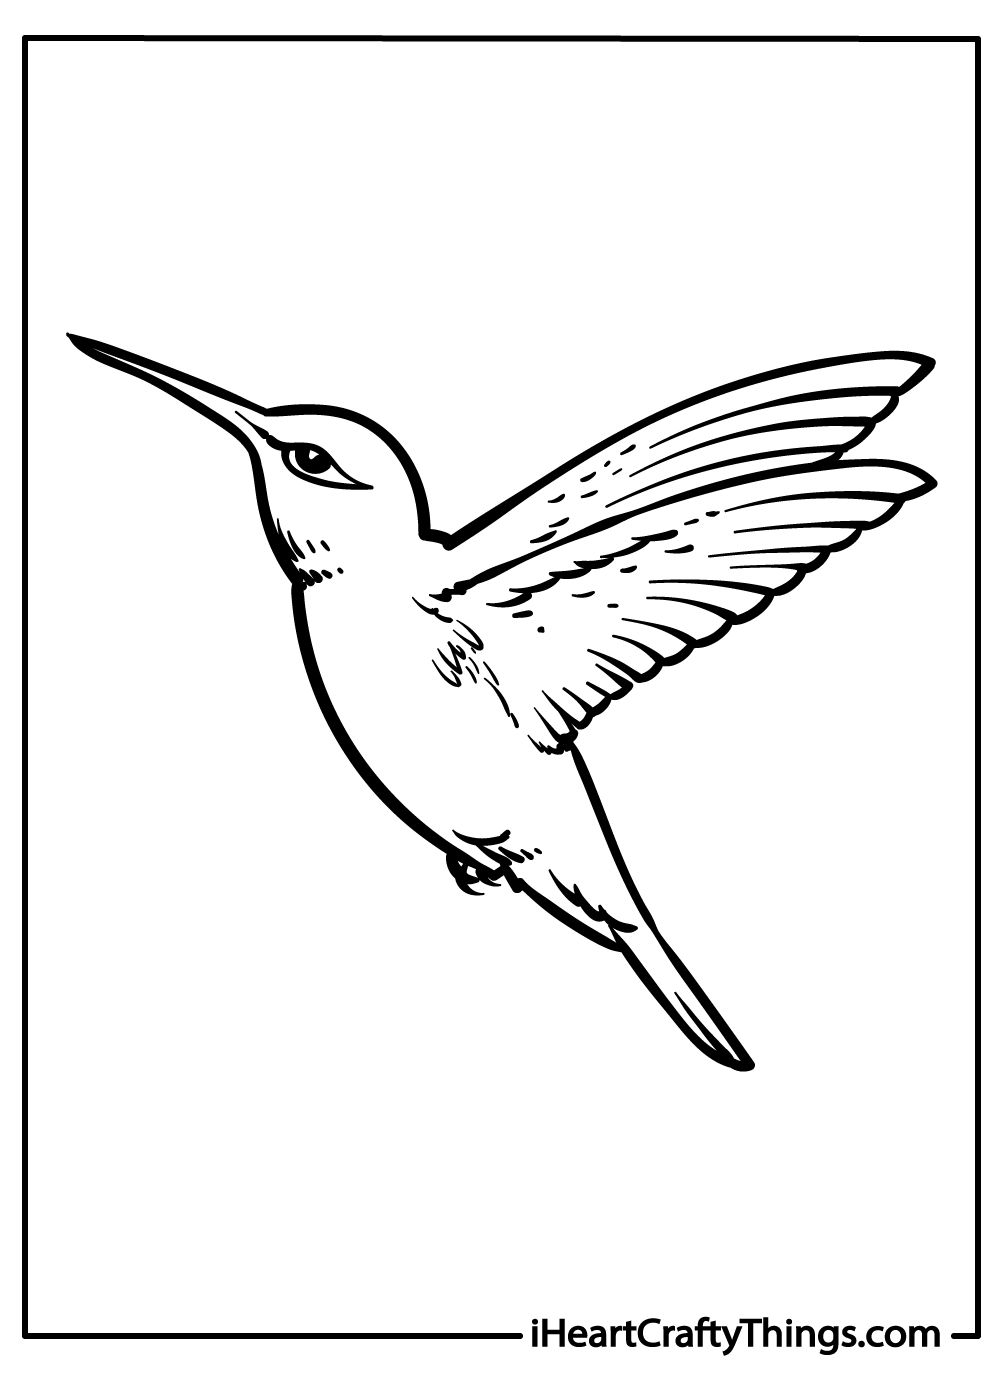 Hummingbird Coloring pdf Sheets for Kids